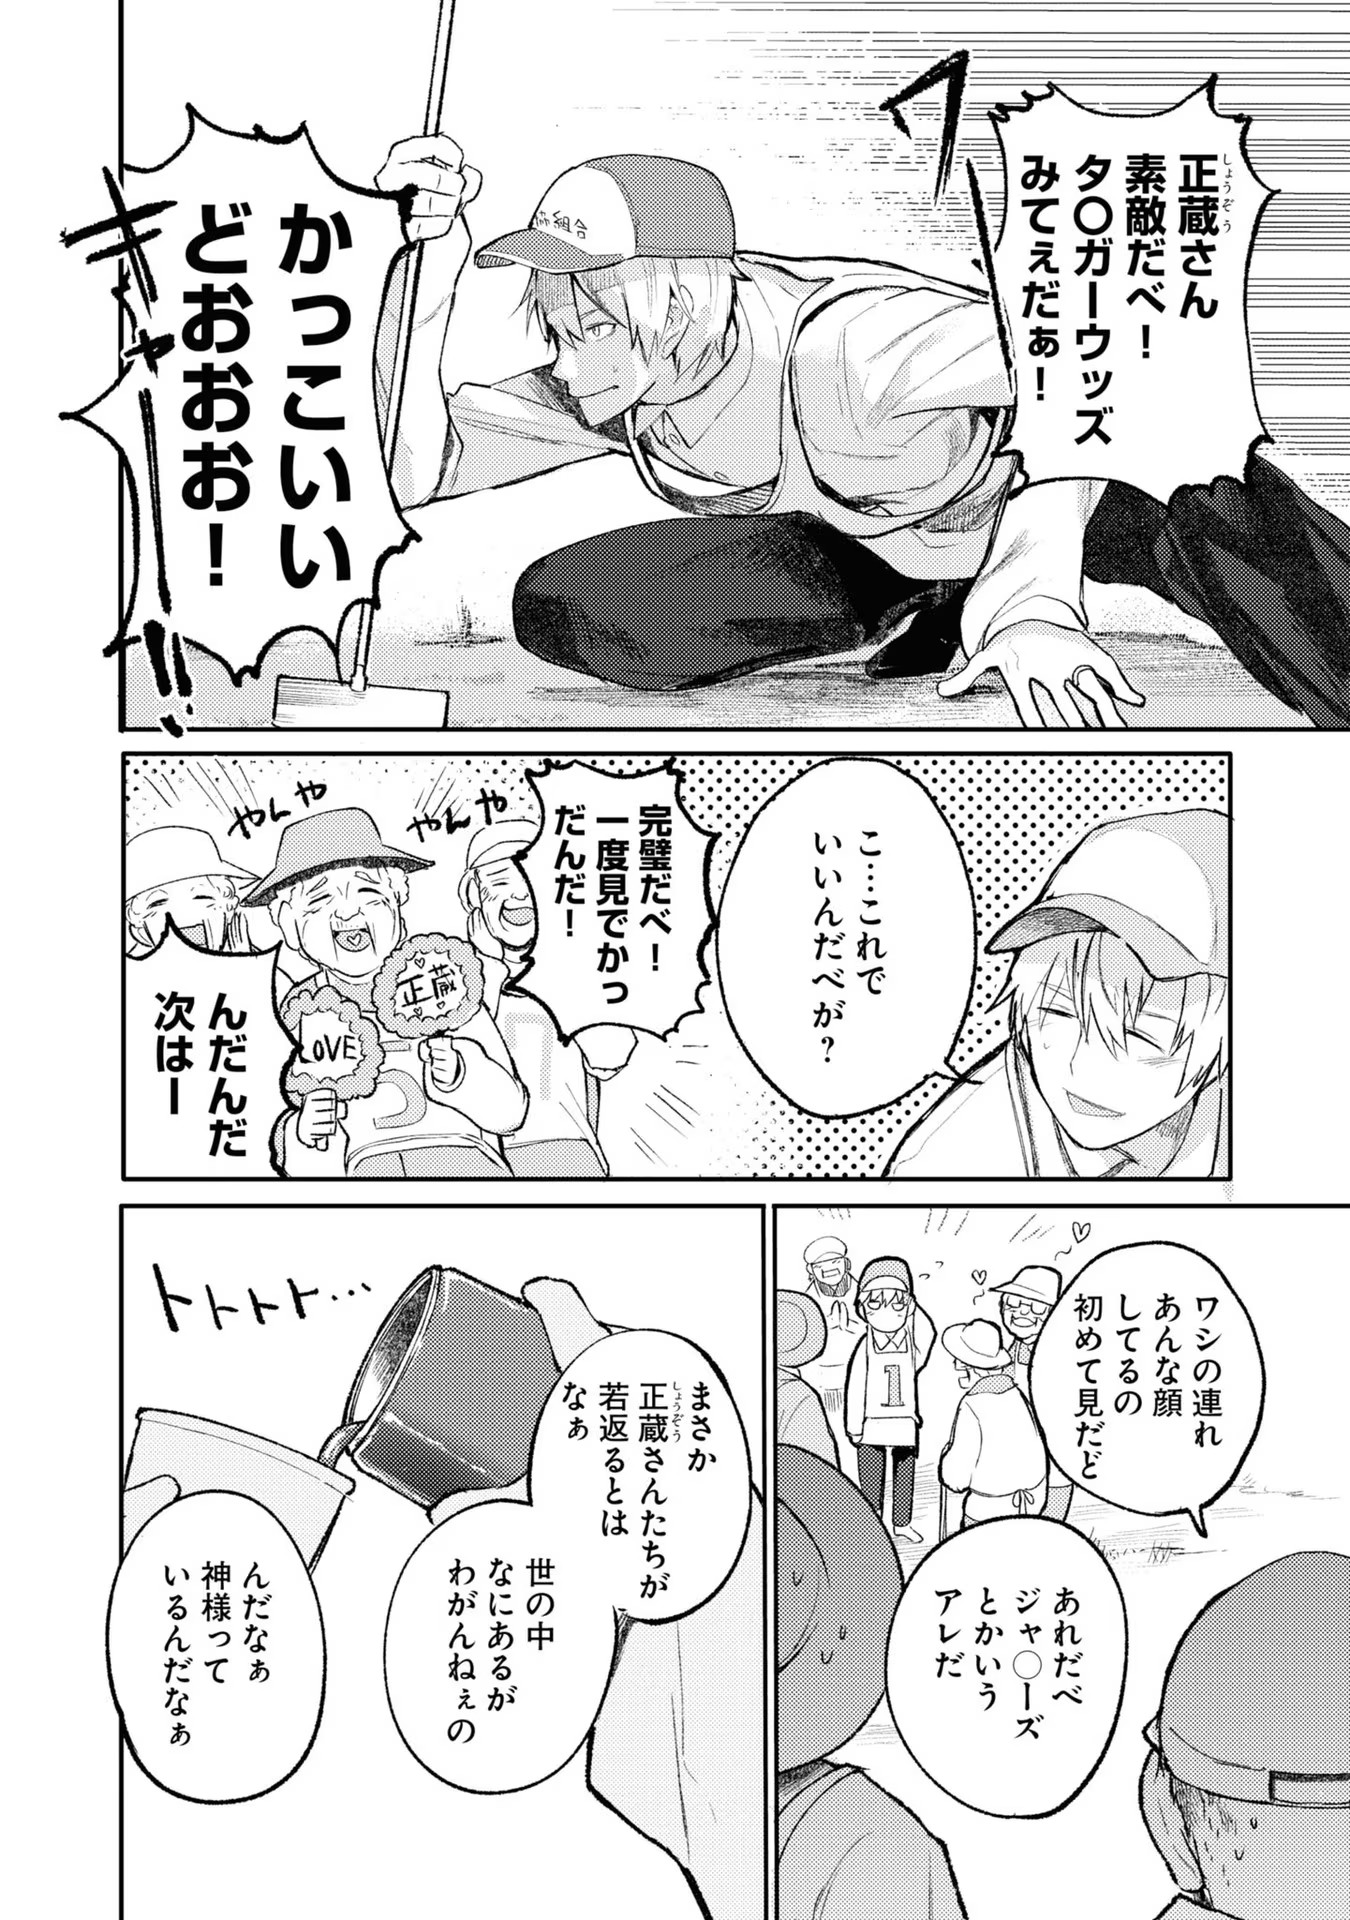 Ojii-san to Obaa-san ga Wakigaetta Hanashi - Chapter 3 - Page 2